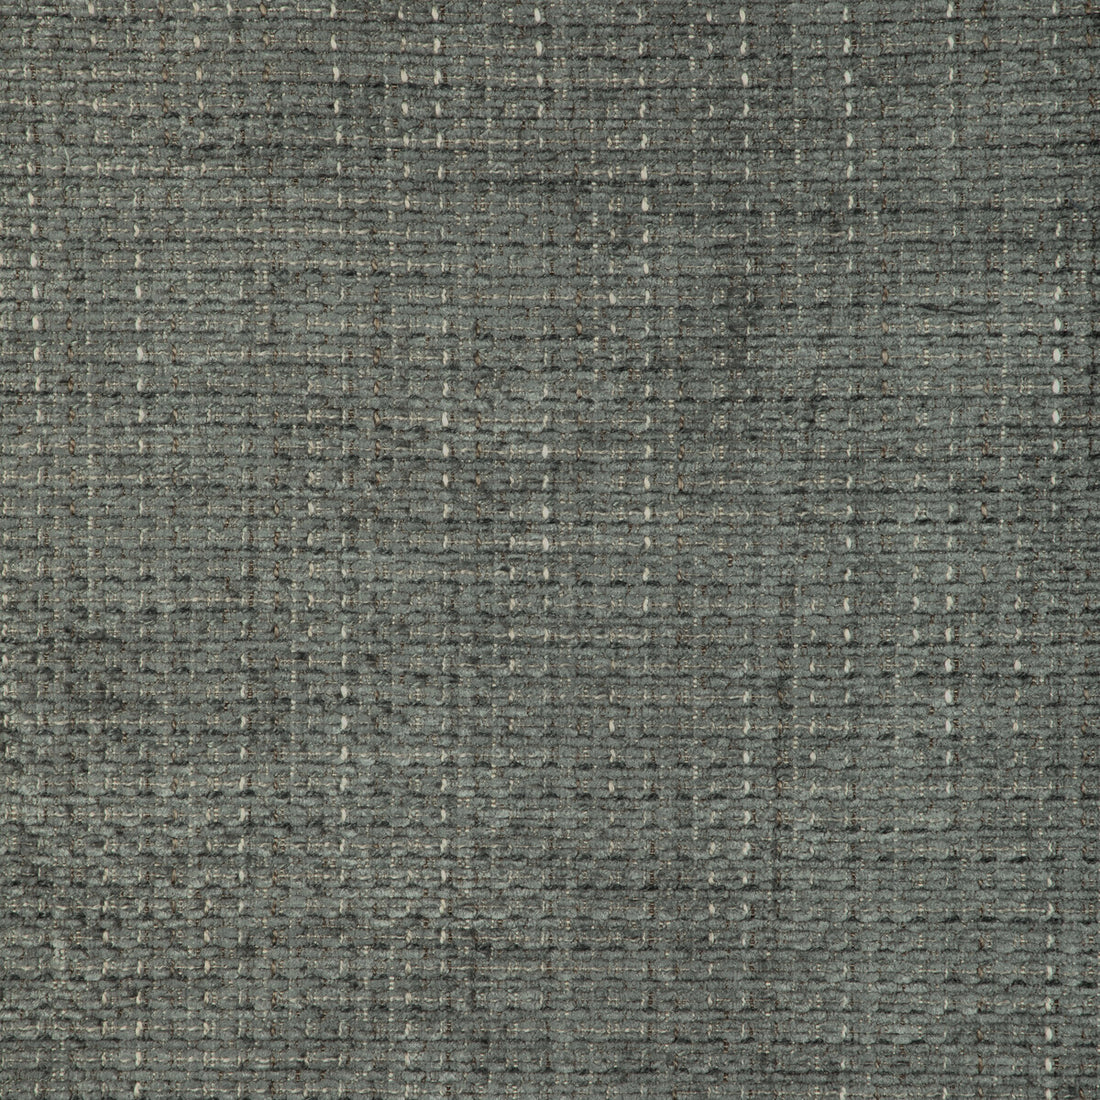 Kravet Smart fabric in 36996-1621 color - pattern 36996.1621.0 - by Kravet Smart